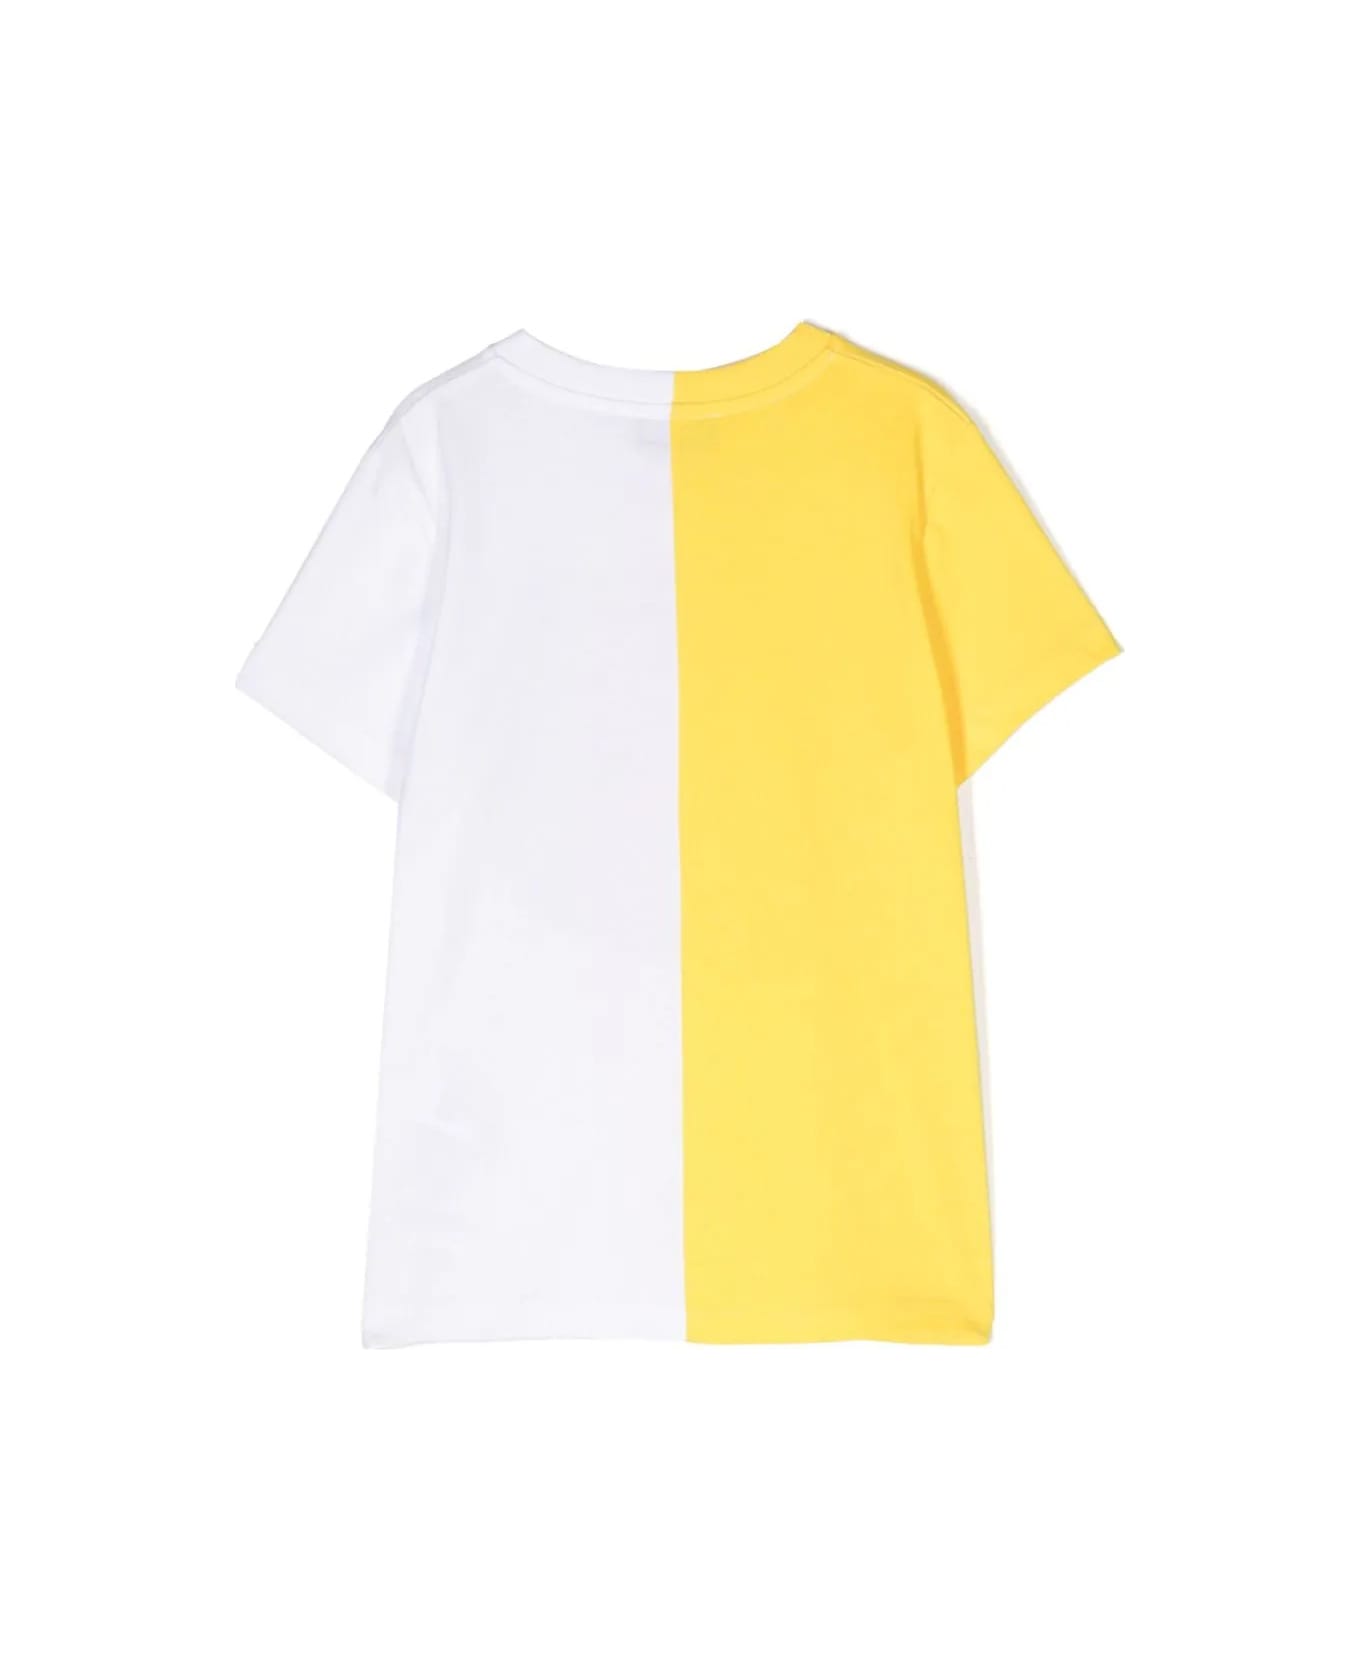 Moschino White And Yellow T-shirt With Moschino Teddy Bear Circular Print - Yellow